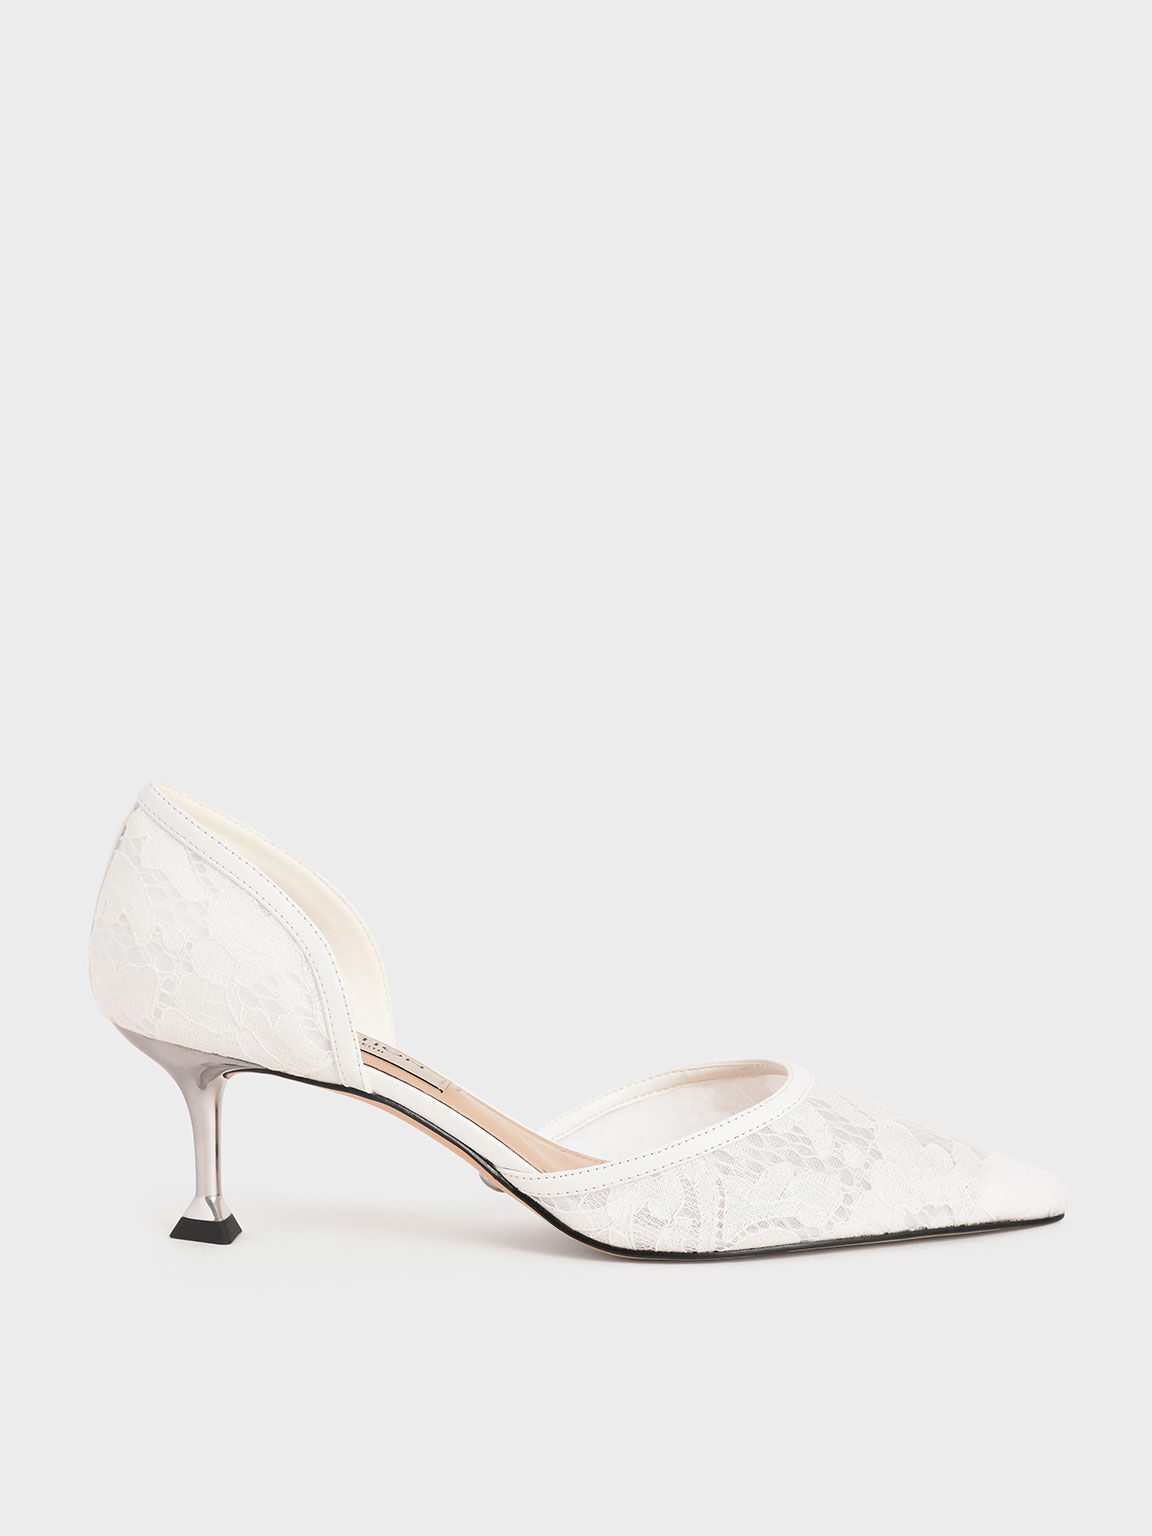 White Wedding Shoes, Bridal Shoes, Block Heels, Lace Wedding Shoes, White  Heels, White Bride Shoes, Wedding Shoes, White Lace High Heels - Etsy